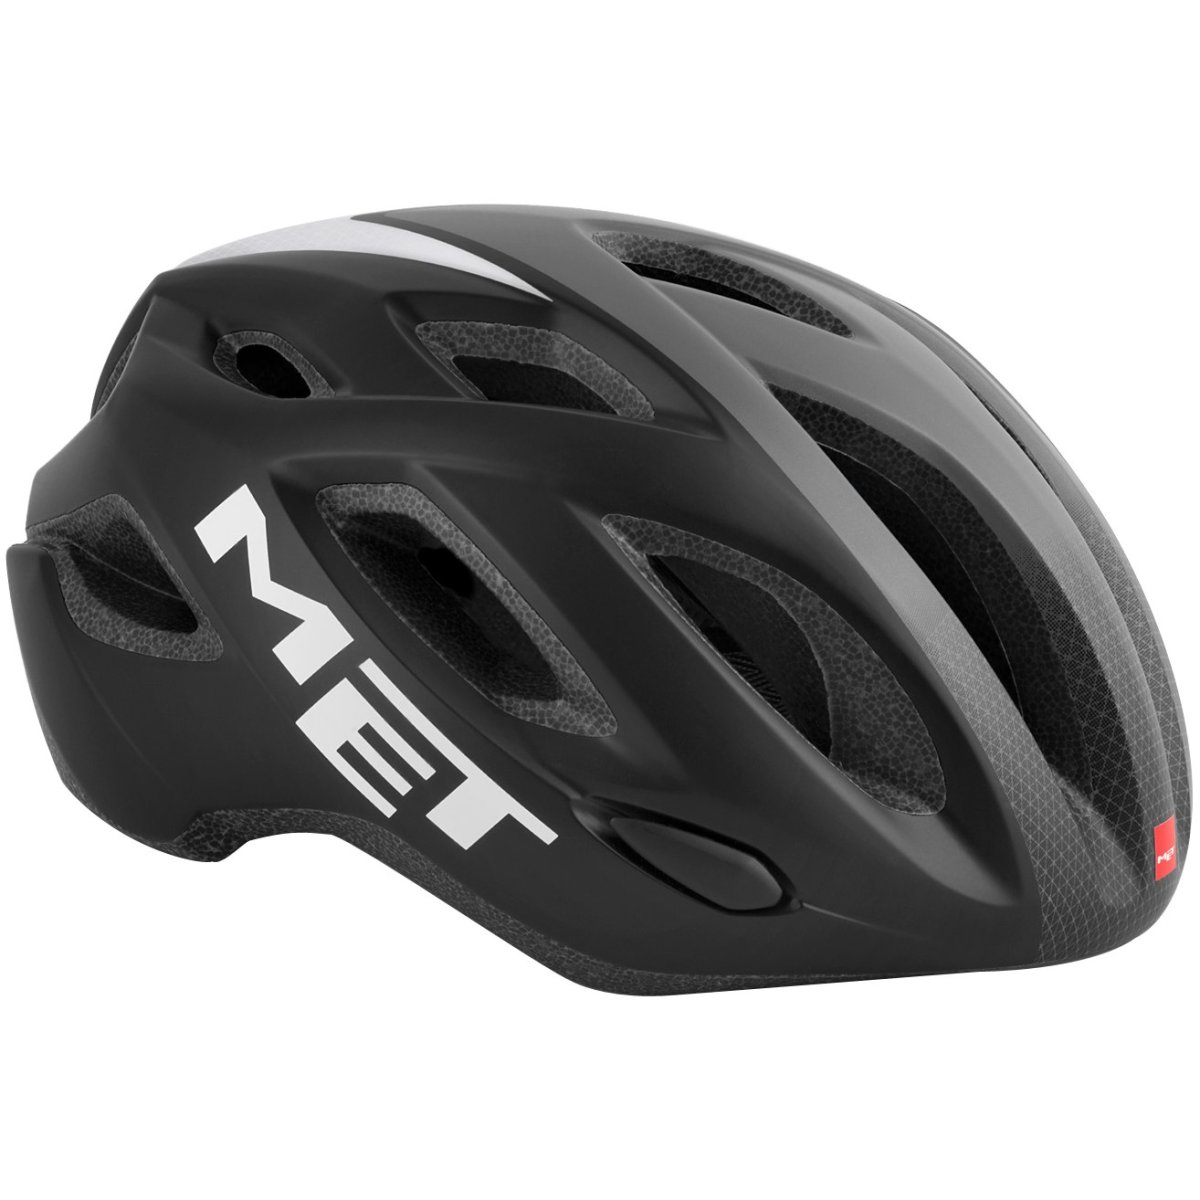 Велосипедный шлем MET Idolo Black Shaded Gray/Matt 3HM 108 XL NB1